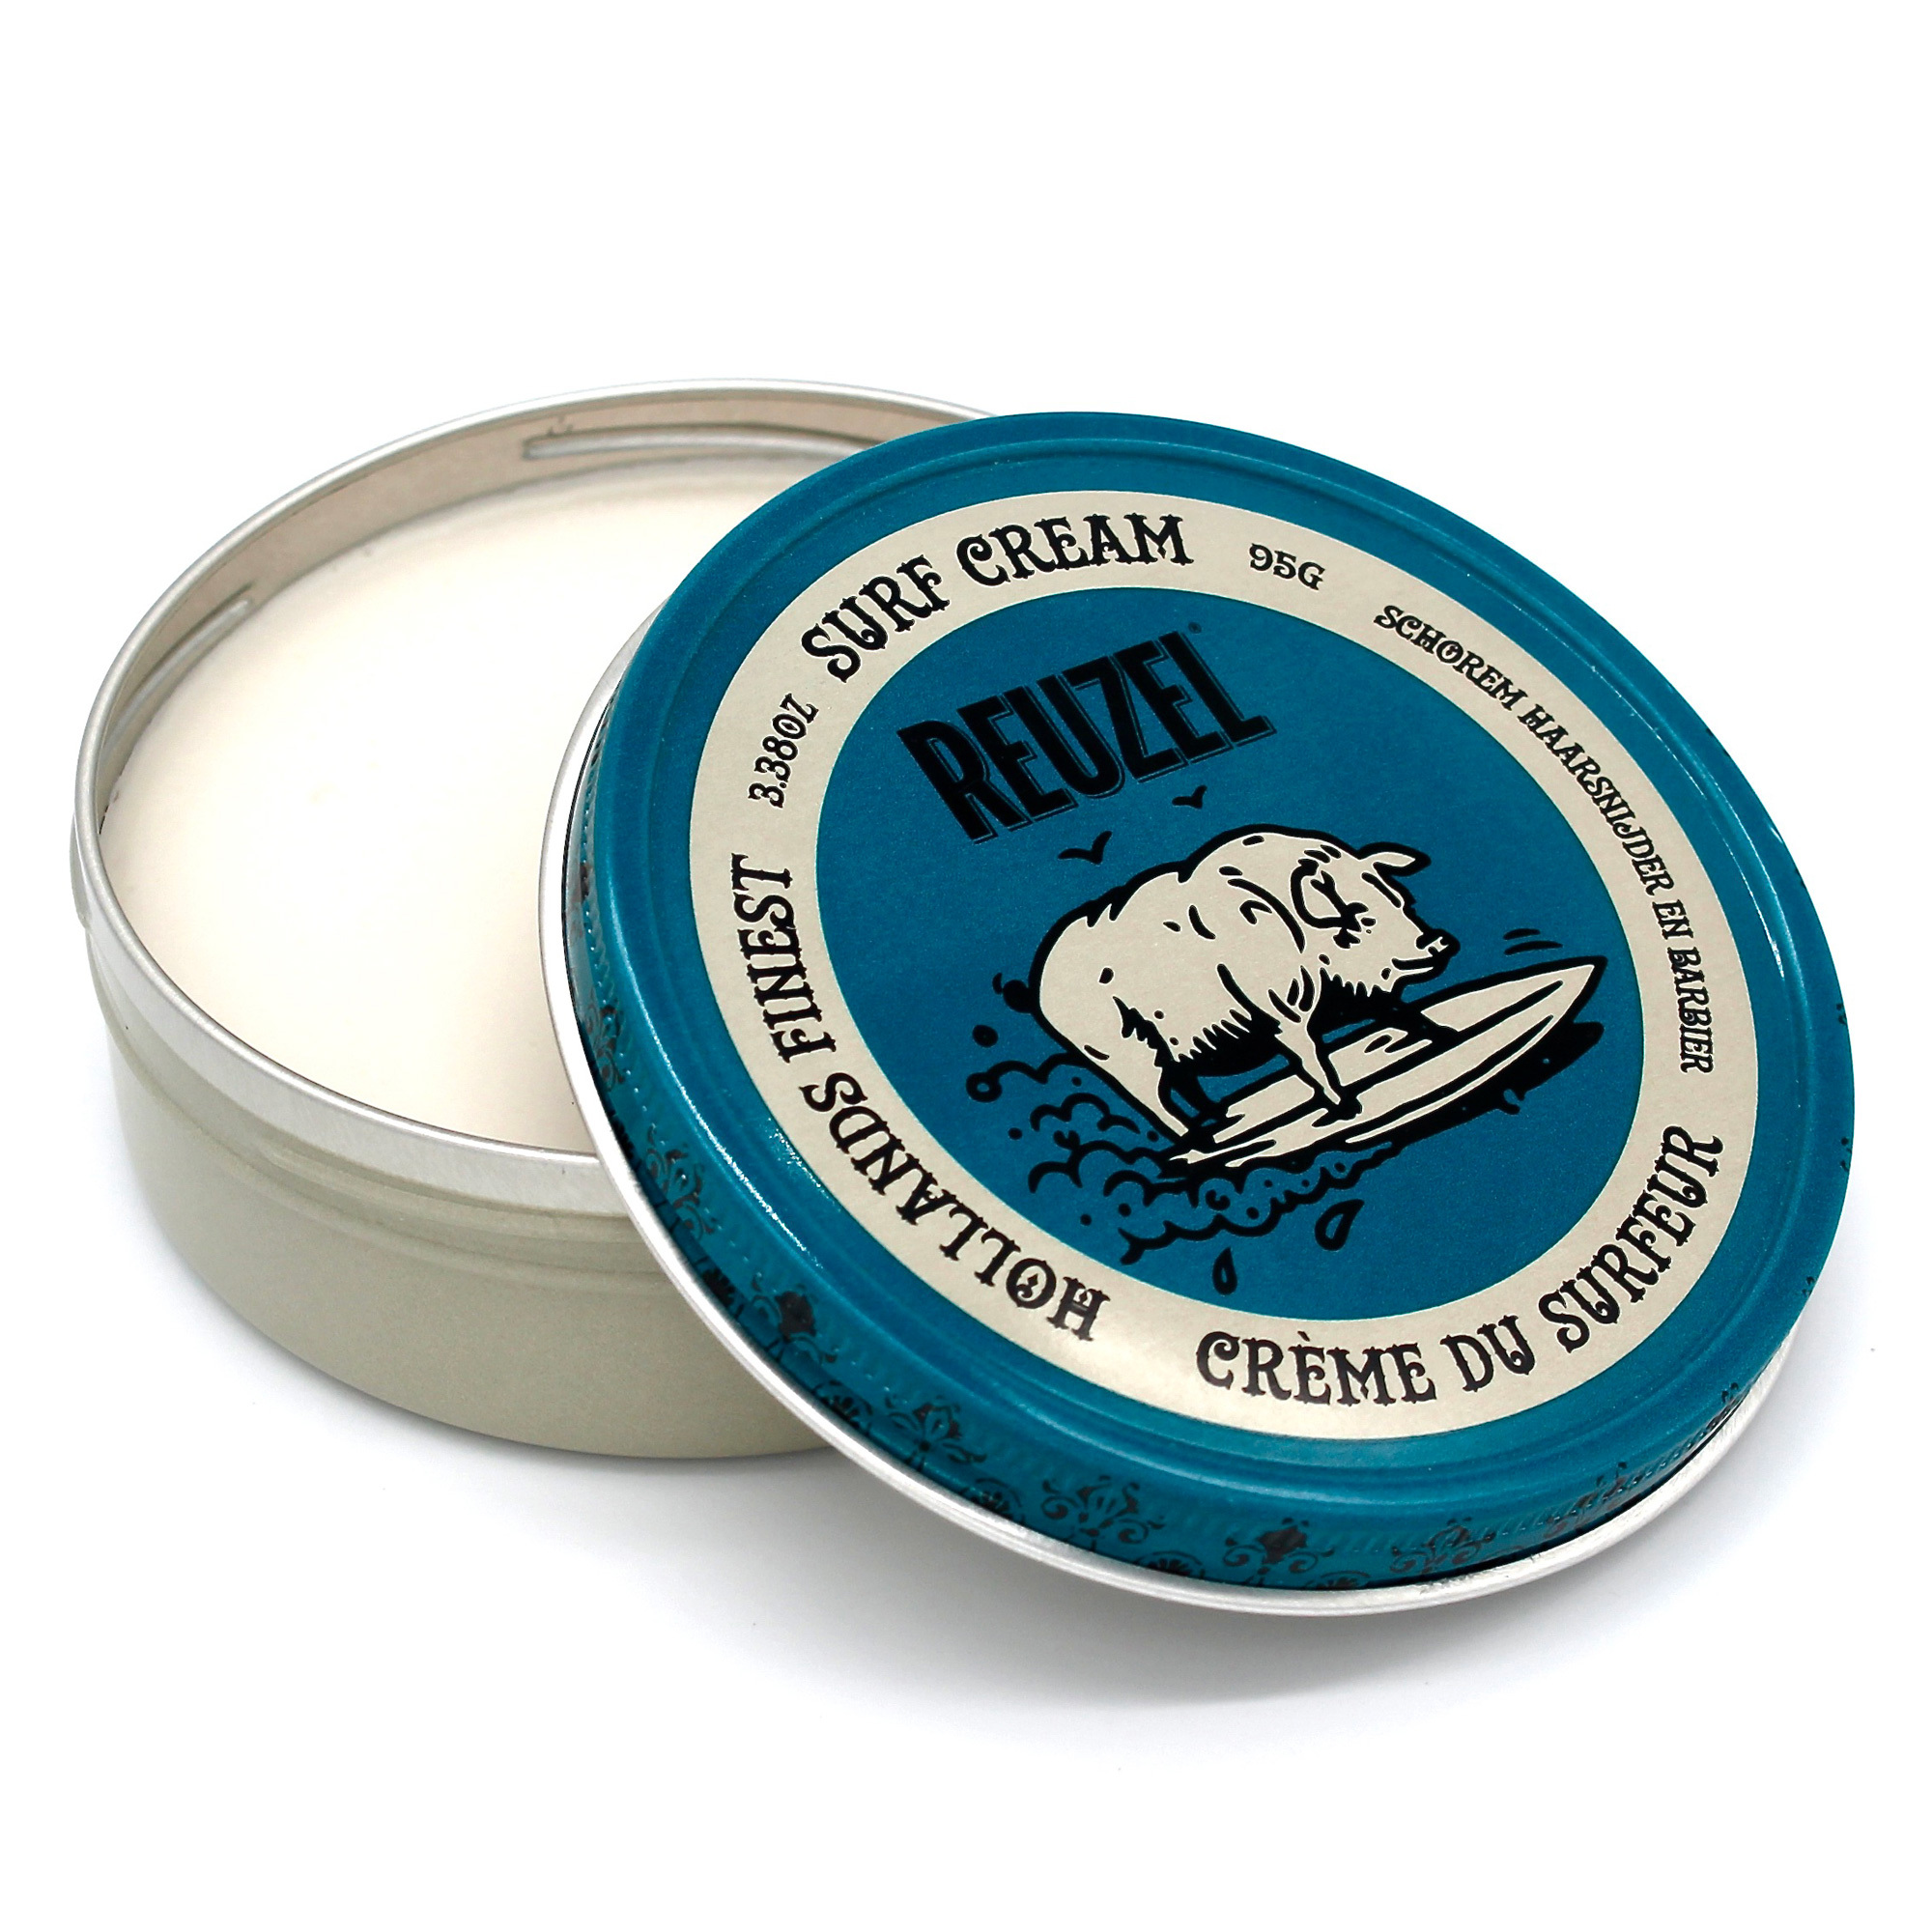 Reuzel Surf Cream: Buy 6 4 oz, Get 1 12 oz Free!